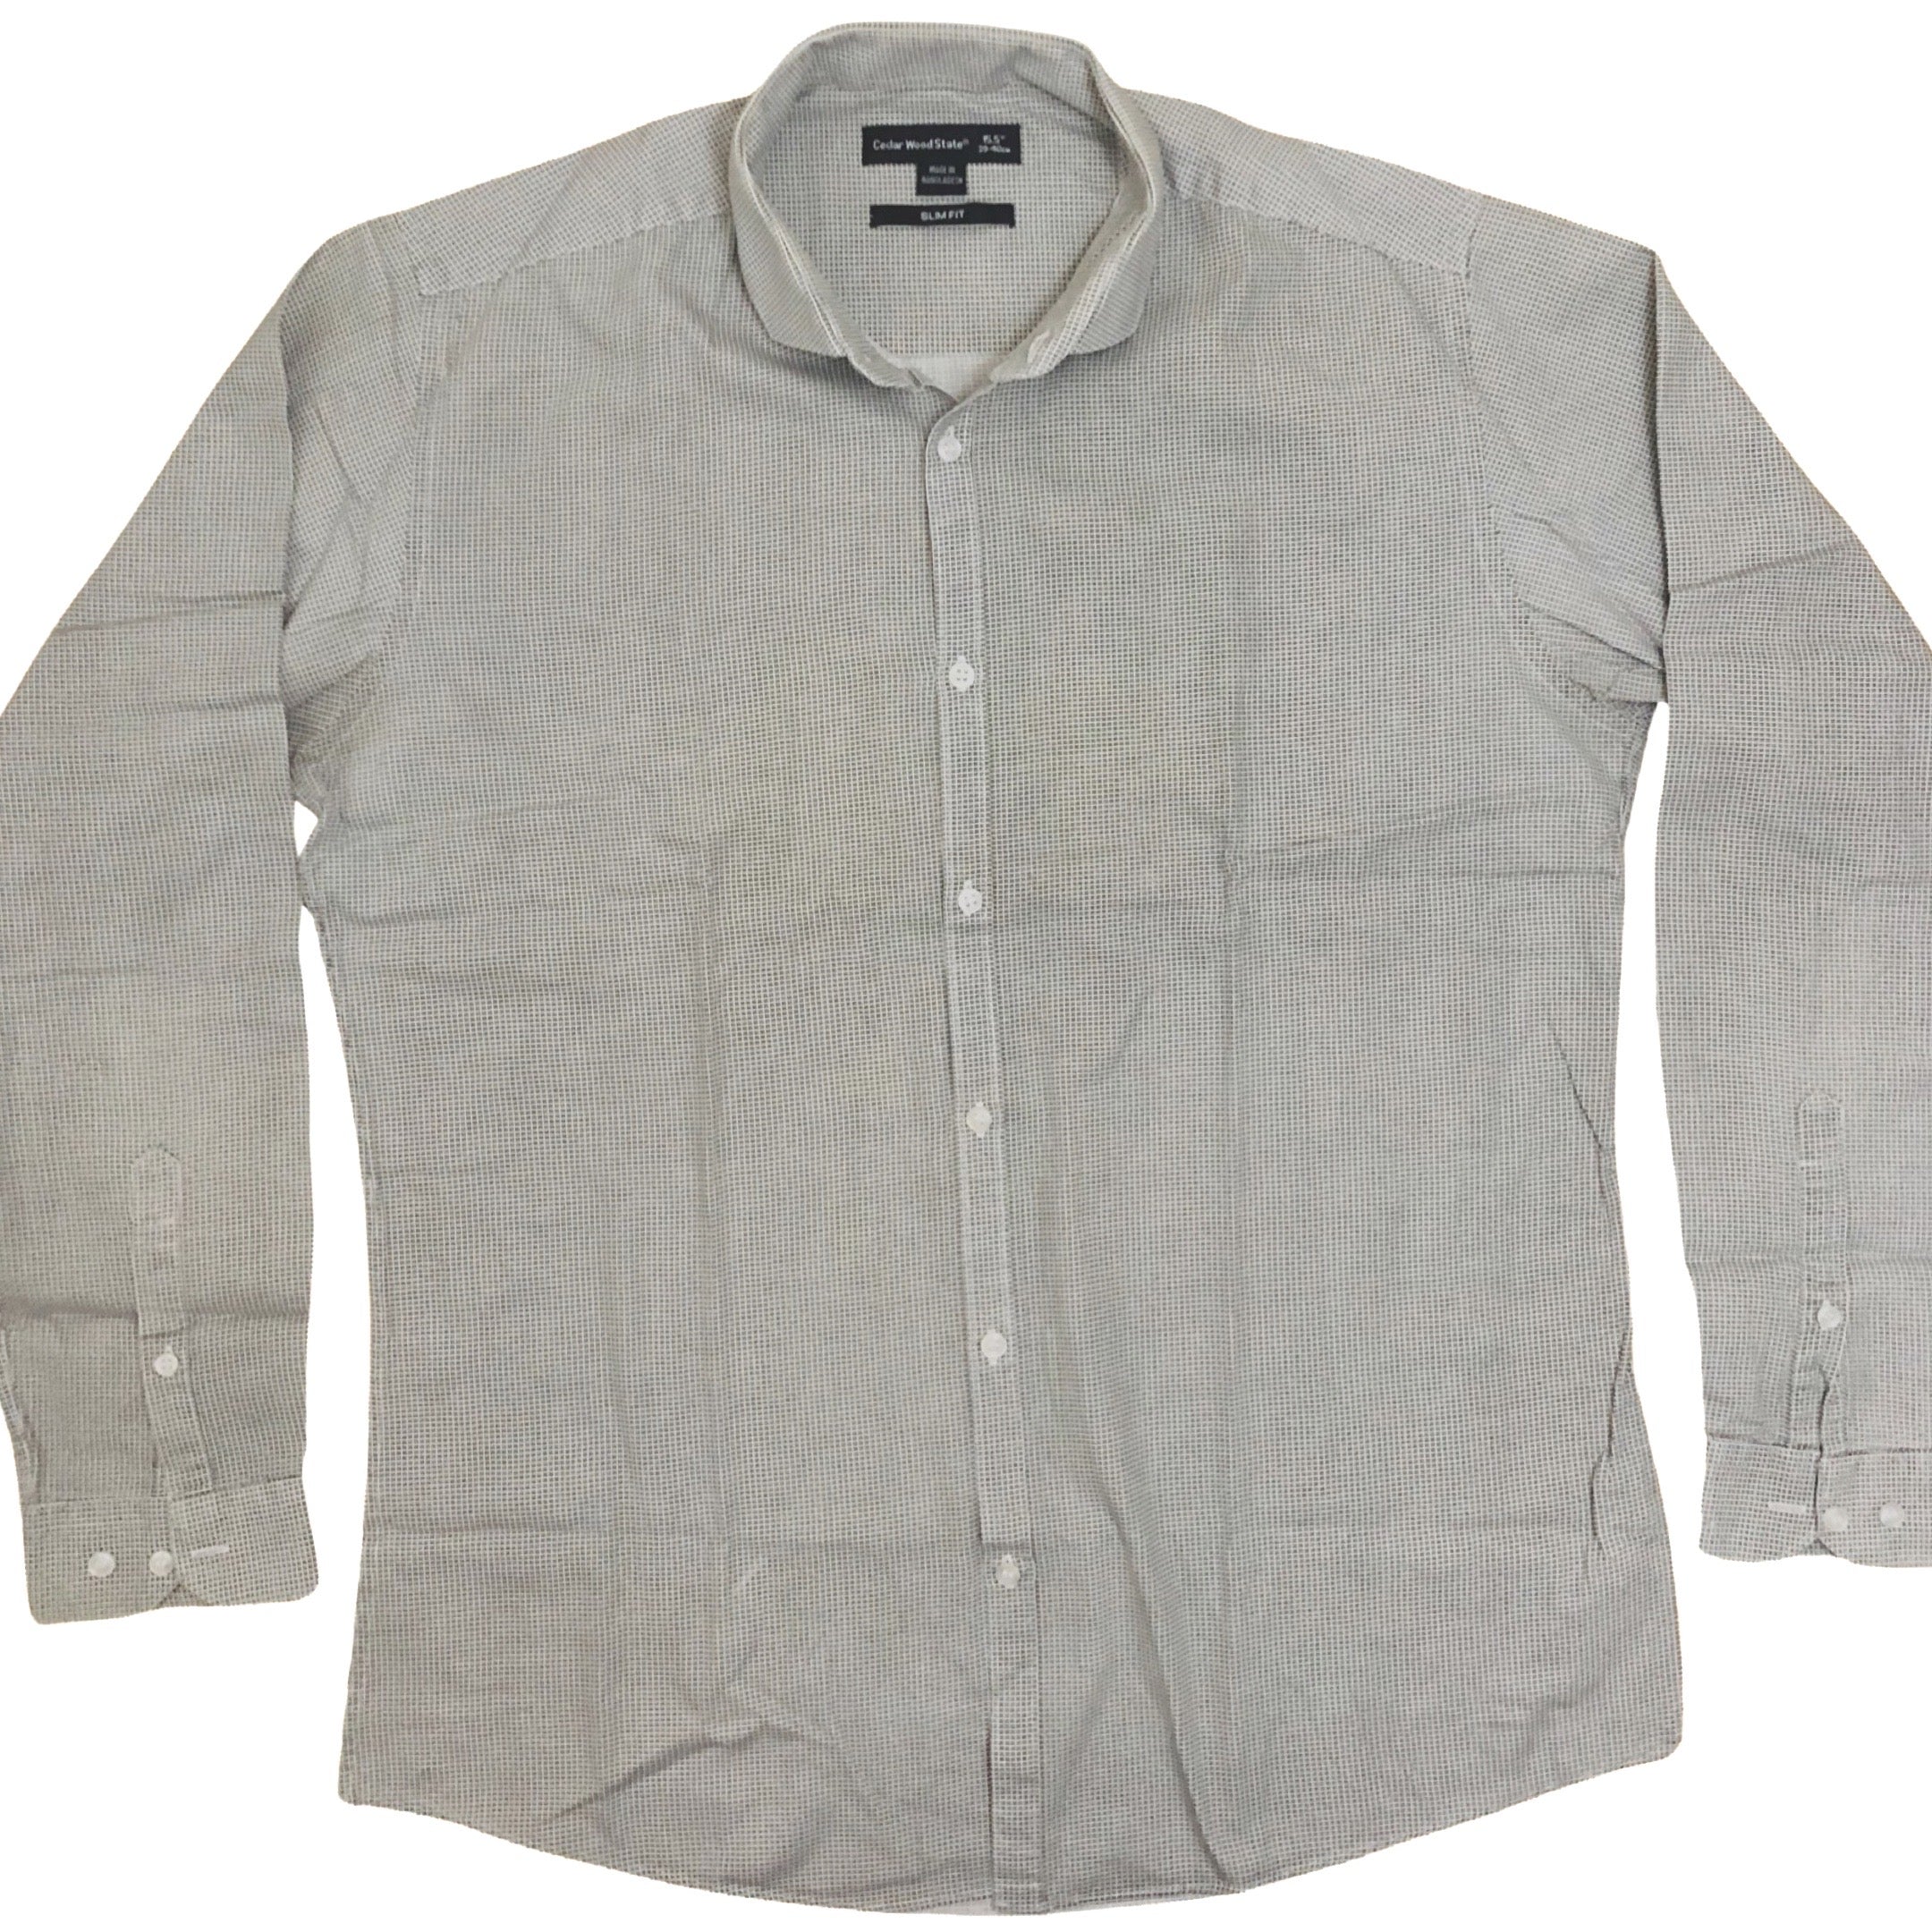 cedar wood state jacket original - Men's Clothing - 186196661